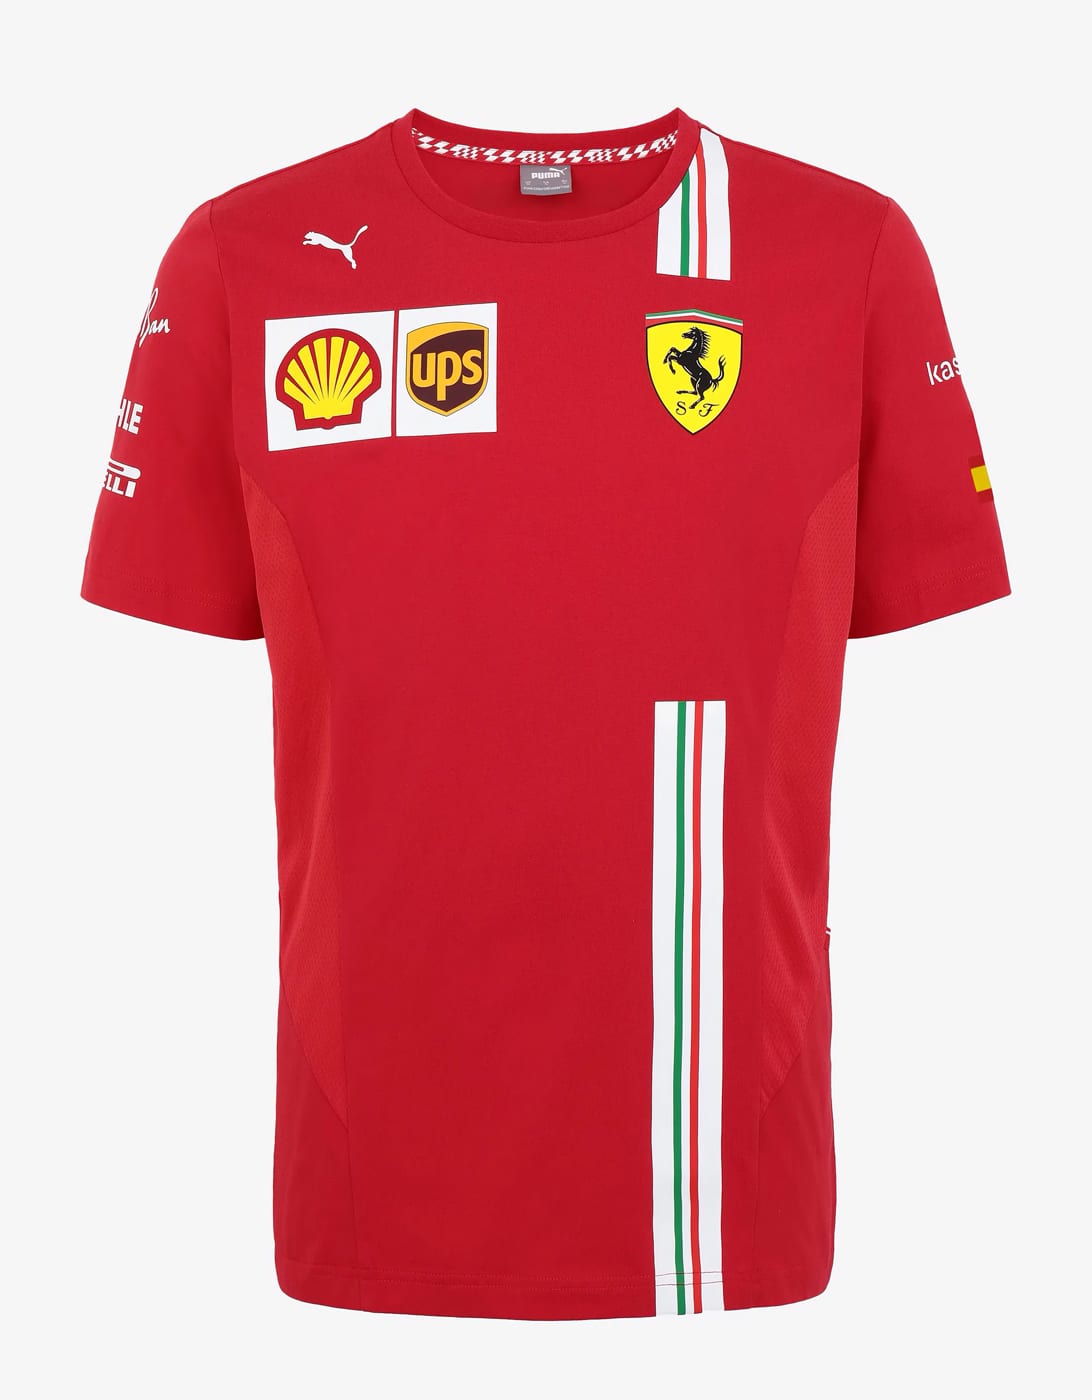 Scuderia Ferrari Reveals New Carlos Sainz Jr. Gear